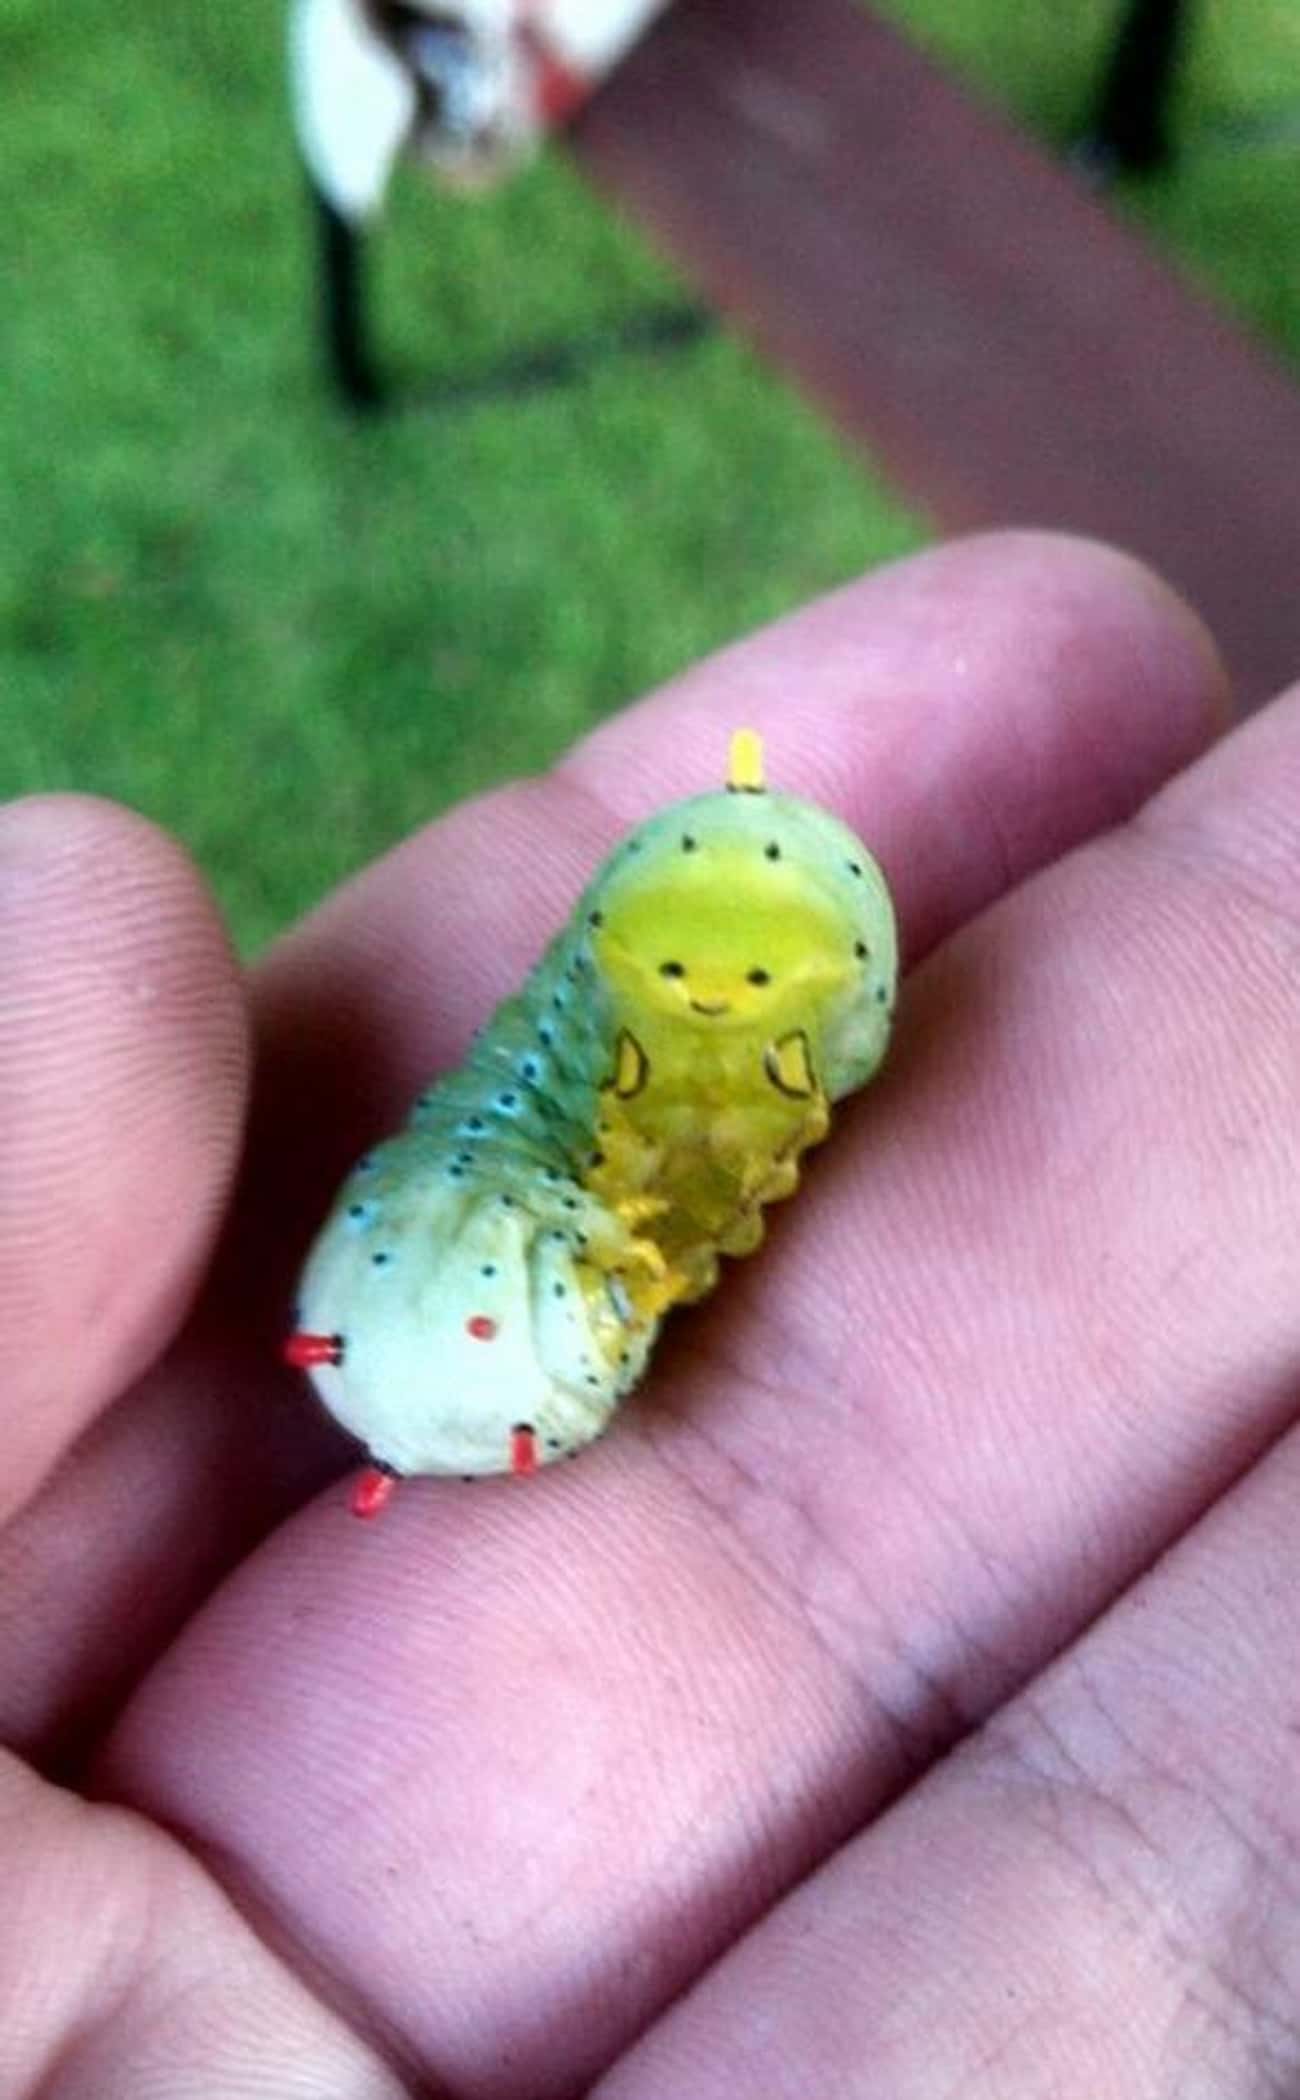 This Shy Caterpillar